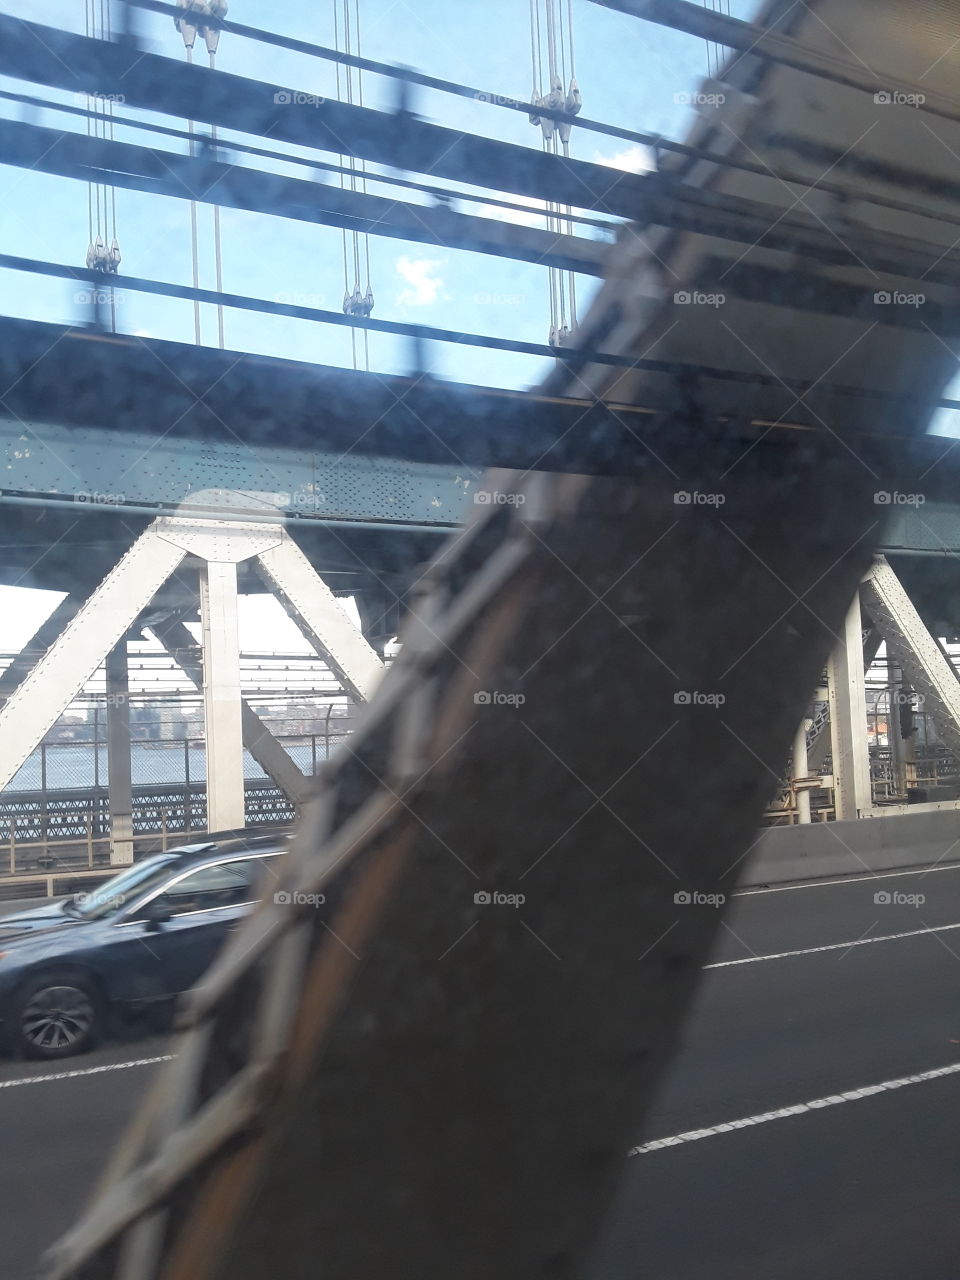 Manhattan Bridge (double-decked), New York (supports pedestrians, vehicles, and trains